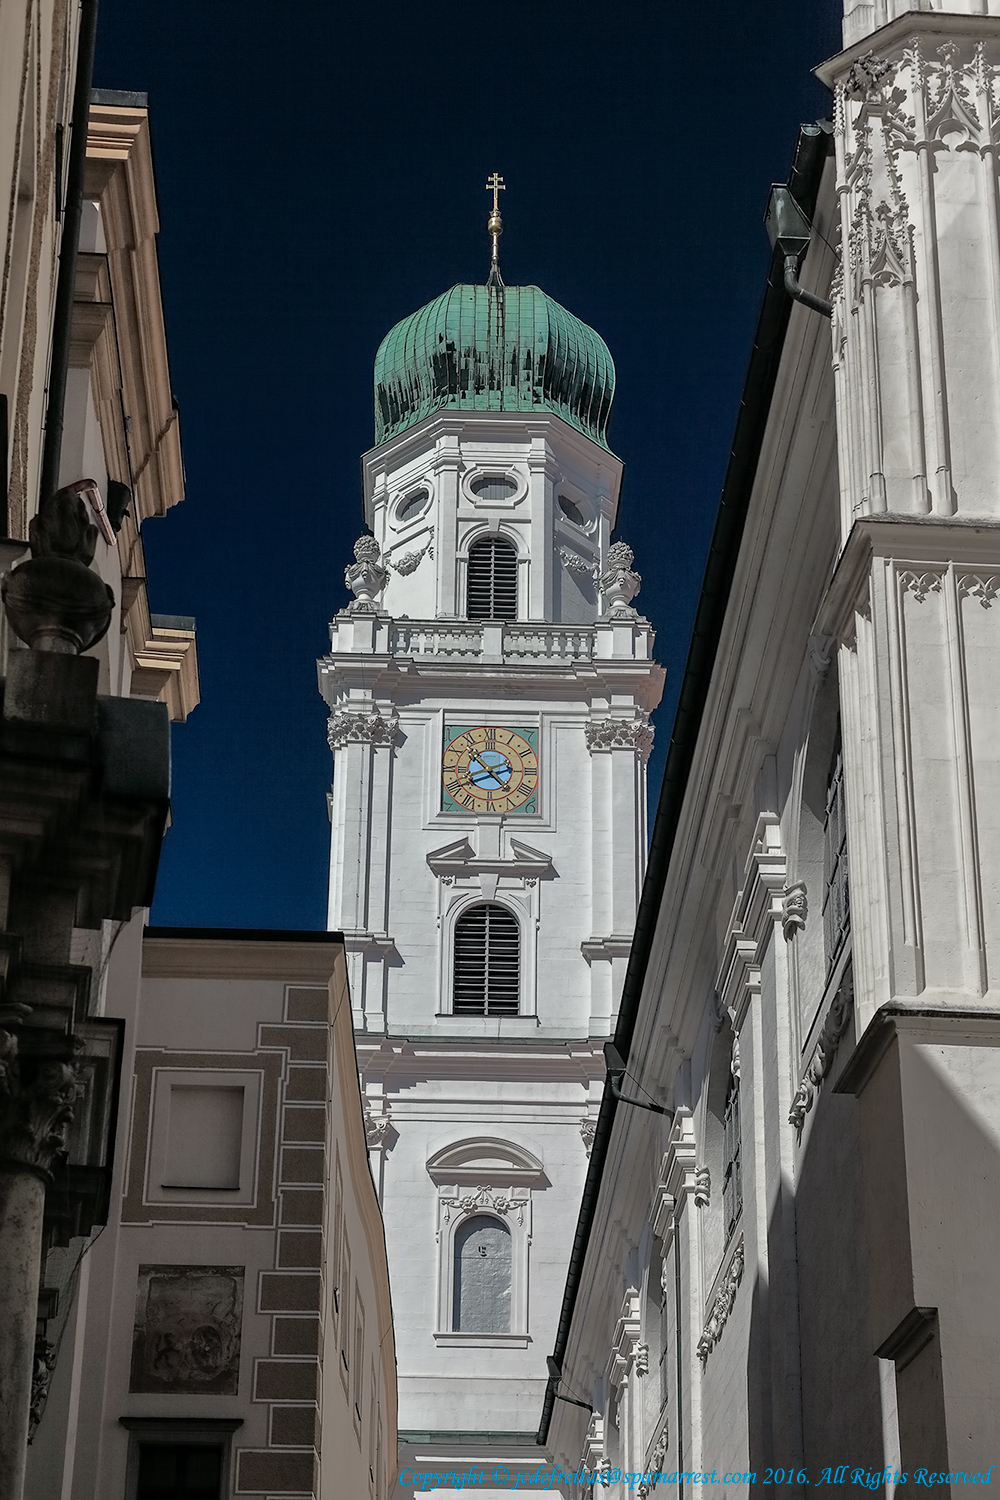 2016 - Passau - Germany